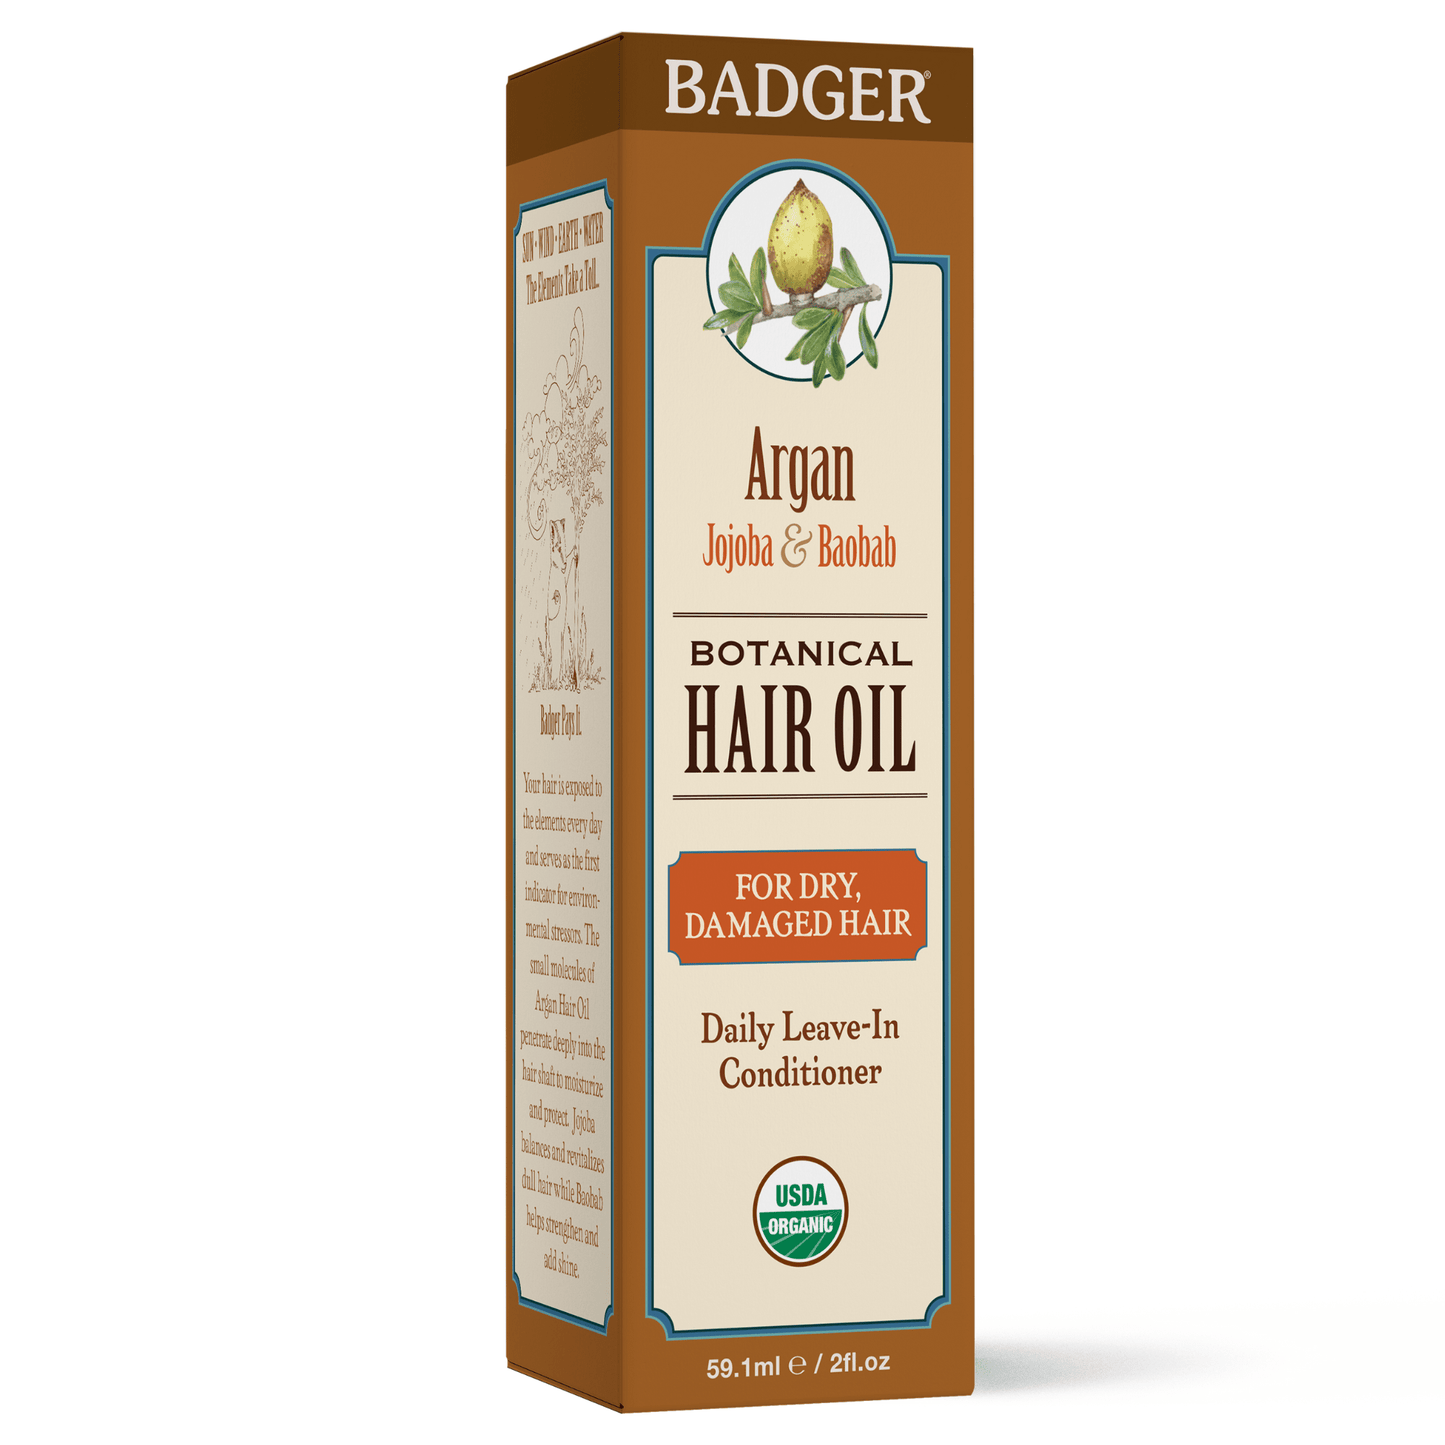 Alternate Image of Argan Botanical Hair Oil Box